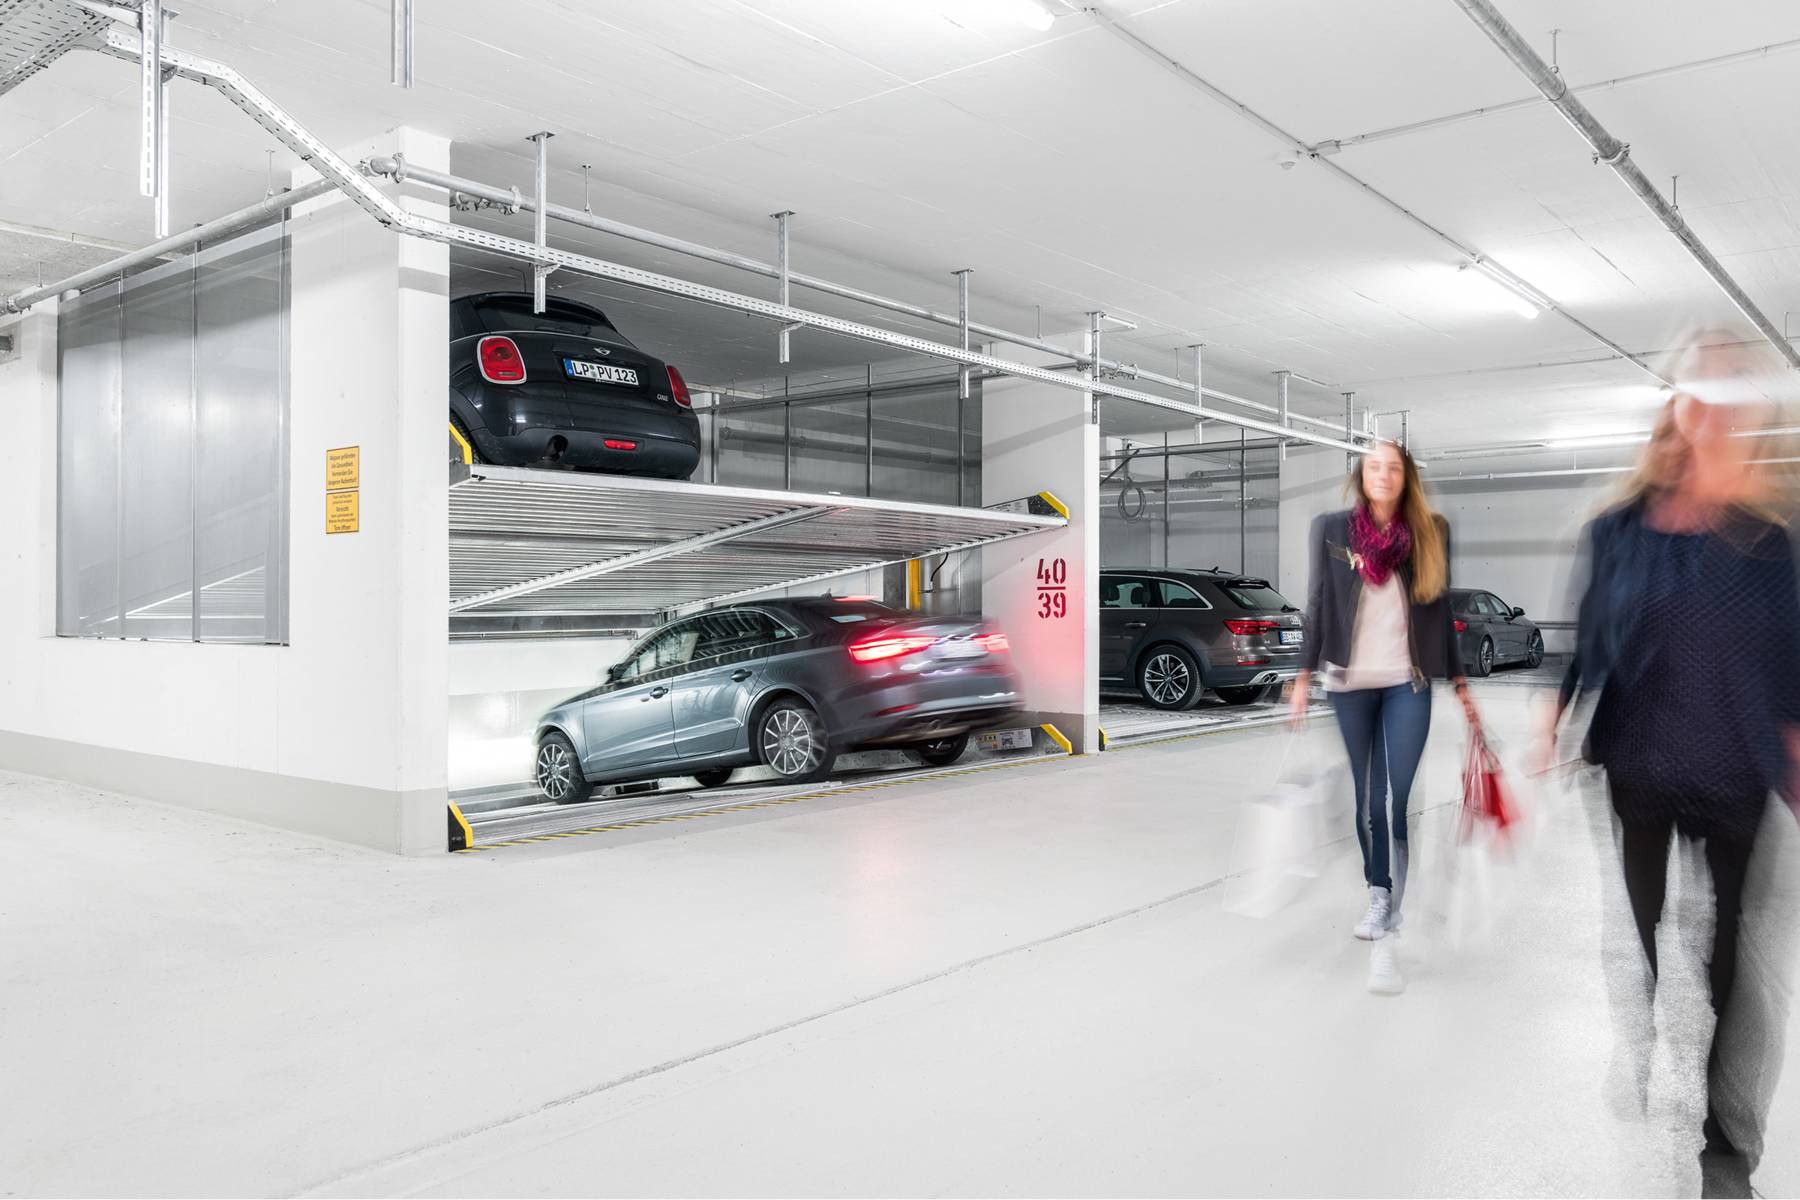 7 Solutions to Make Home Garage Parking Easier and Safer